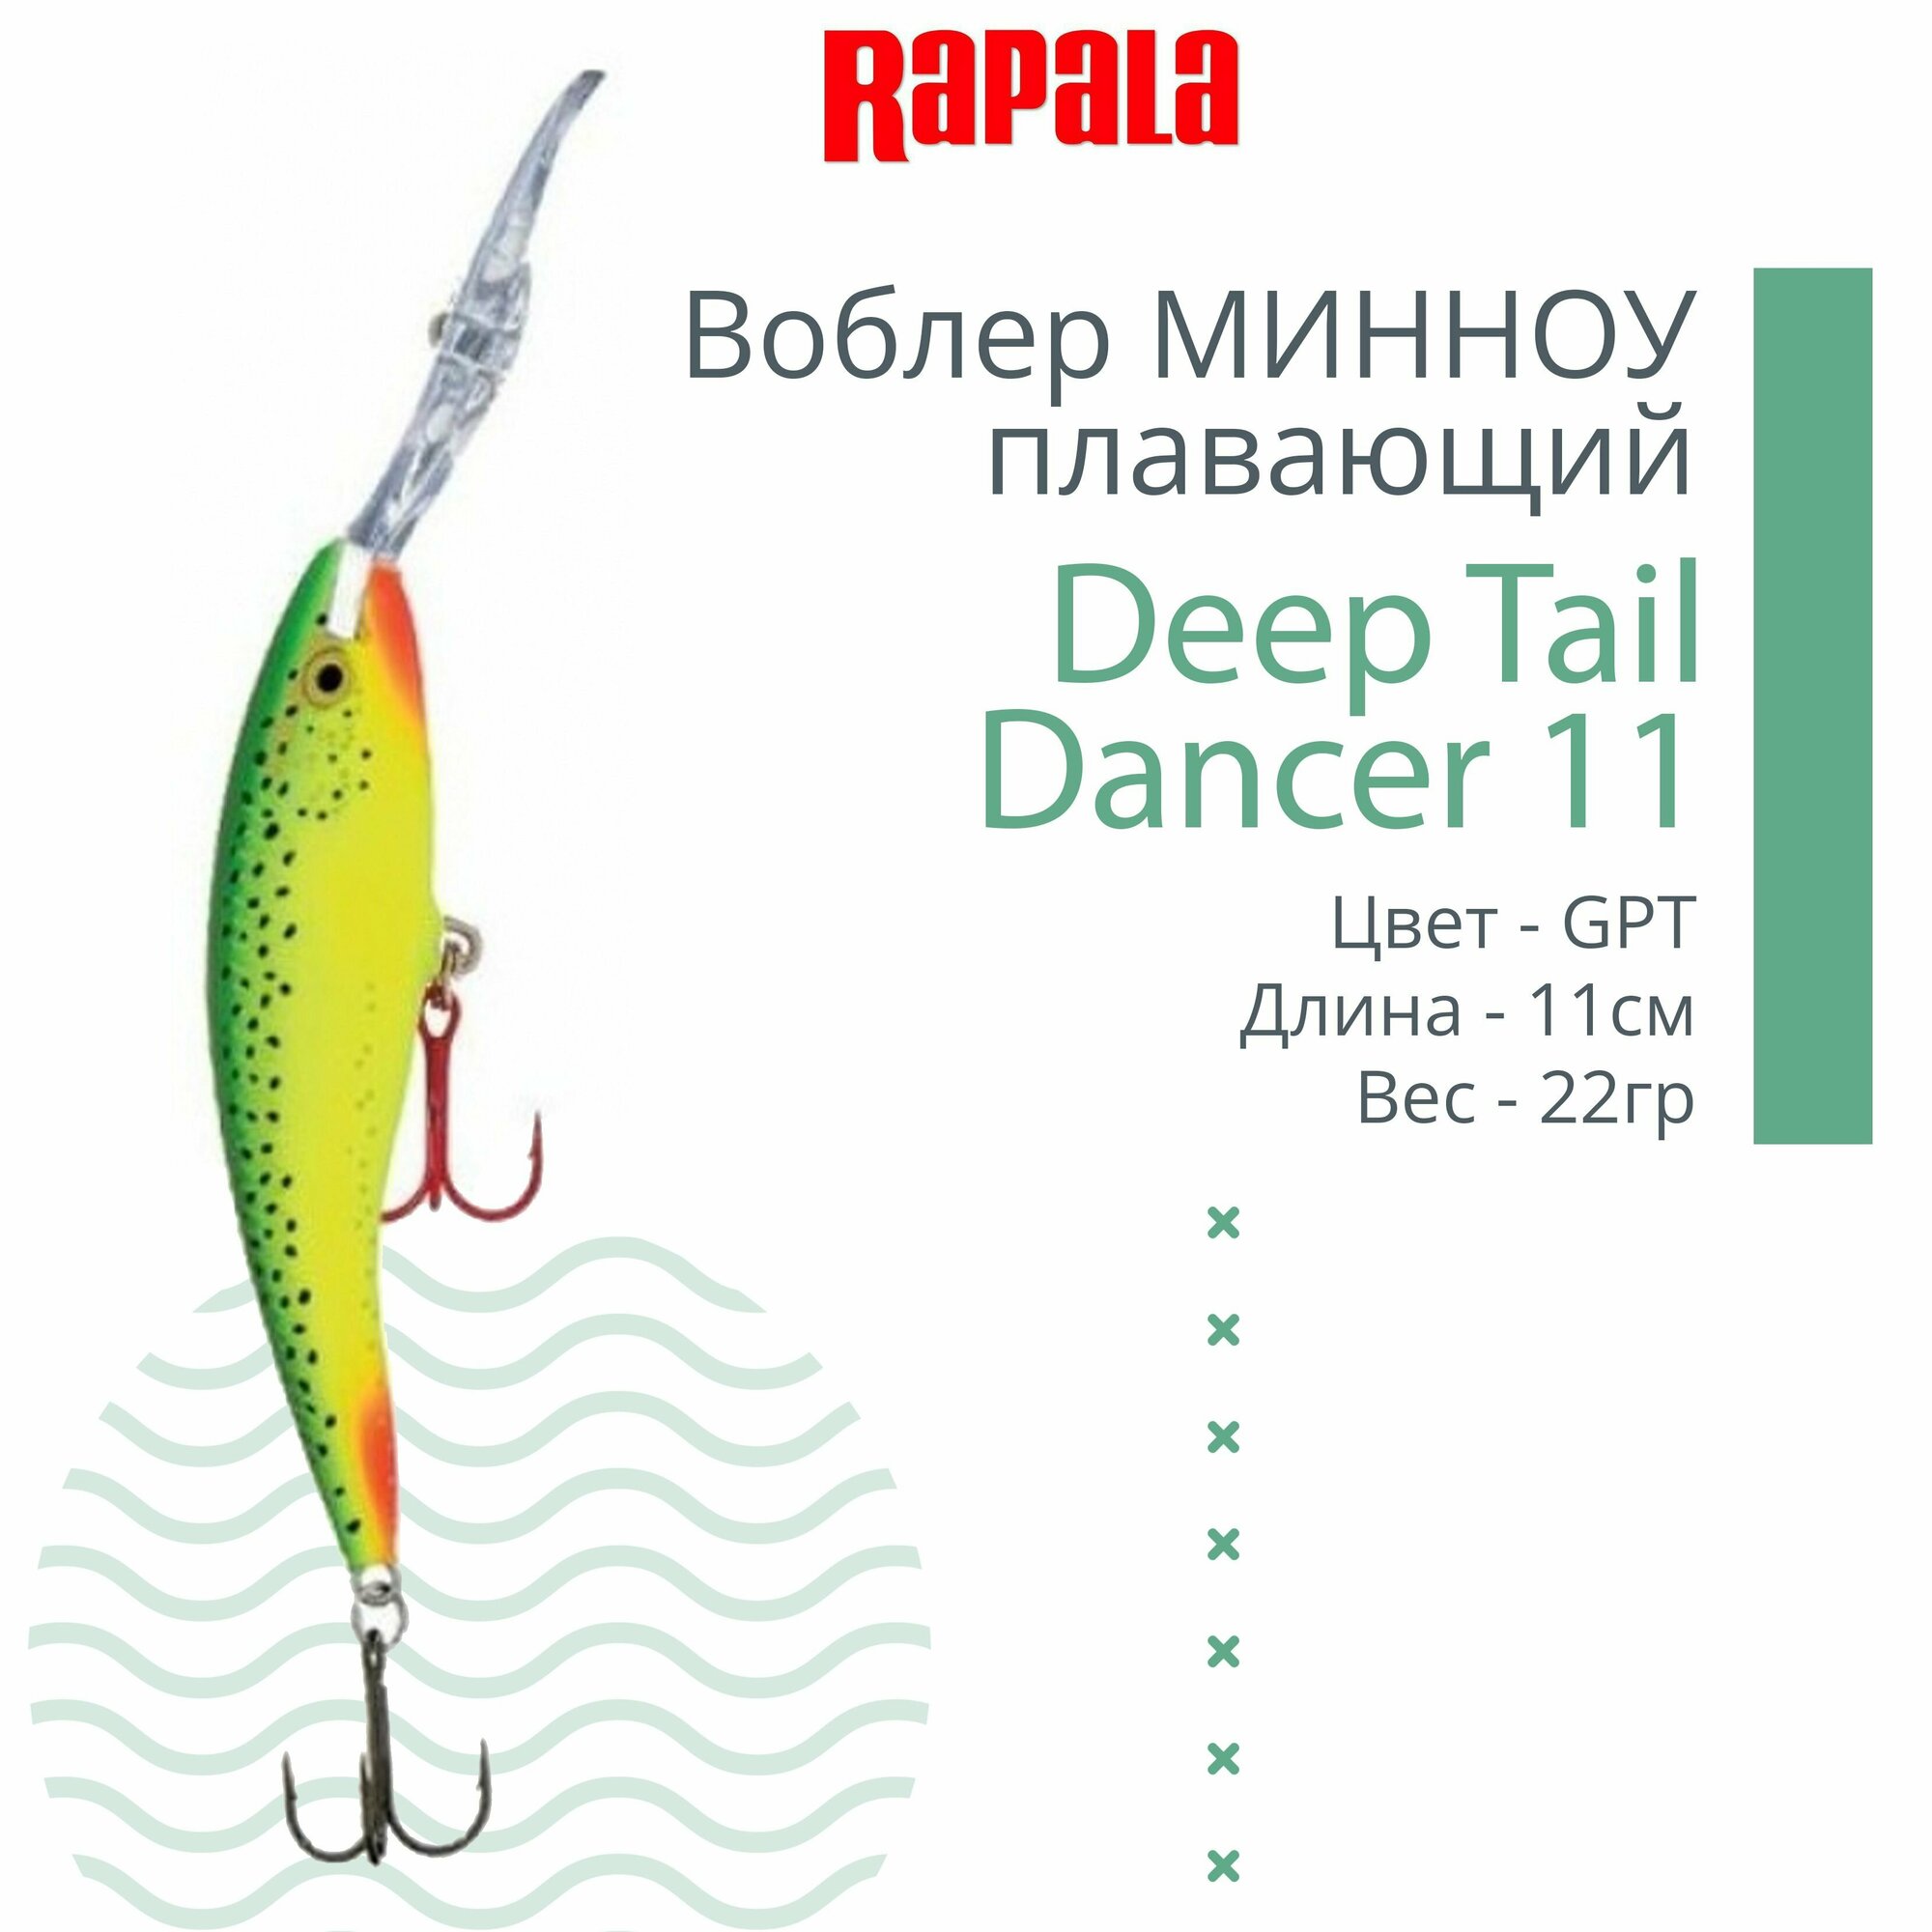 Воблер для рыбалки RAPALA Deep Tail Dancer 11, 11см, 22гр, цвет GPT, плавающий